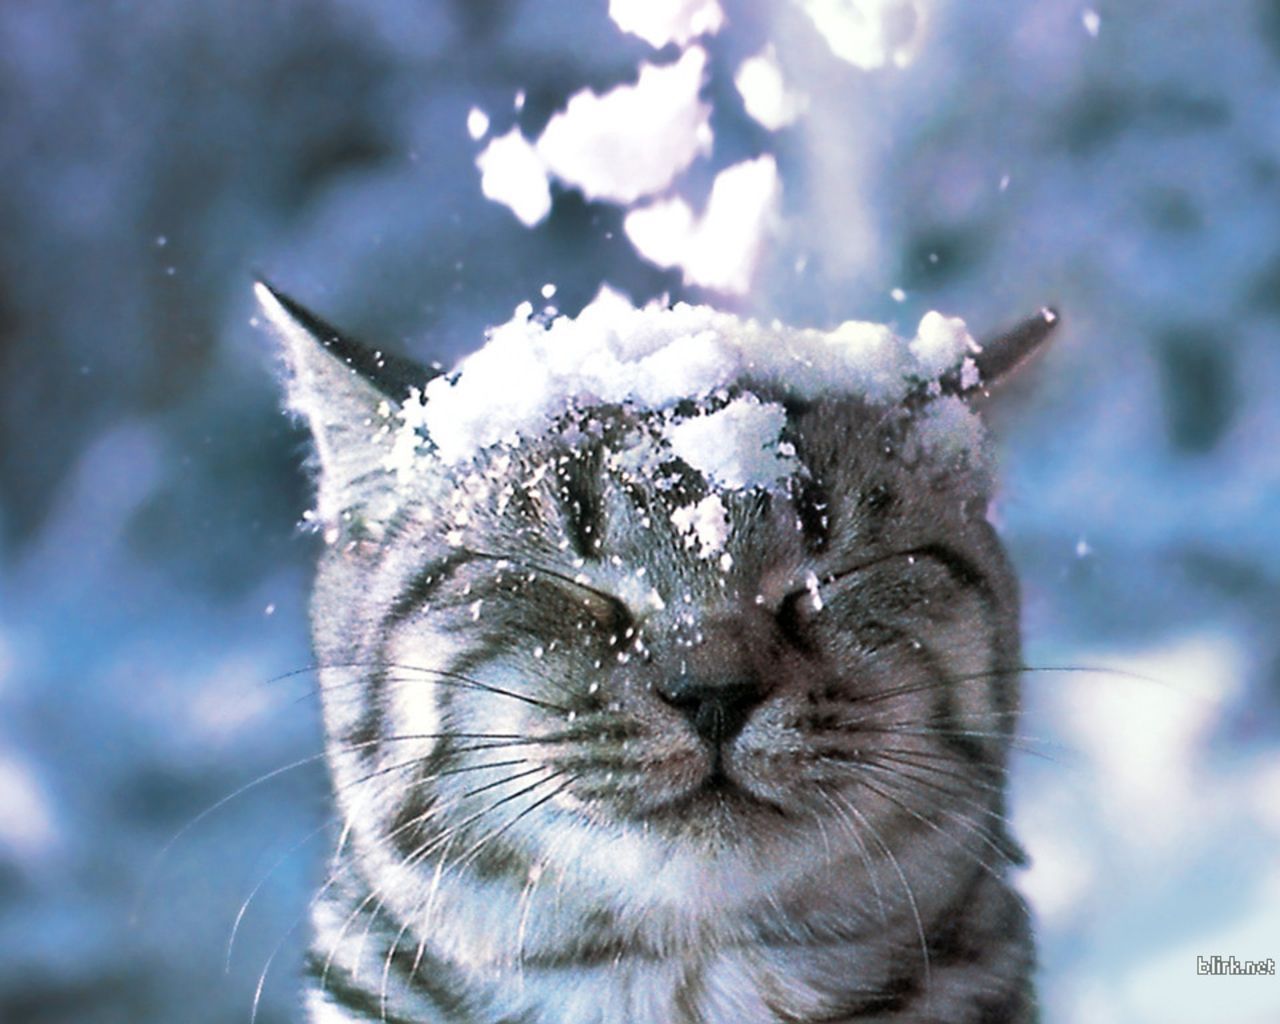 Cats Wallpaper: Cat in the Snow Wallpaper. Cute animals, Animals, Kittens cutest